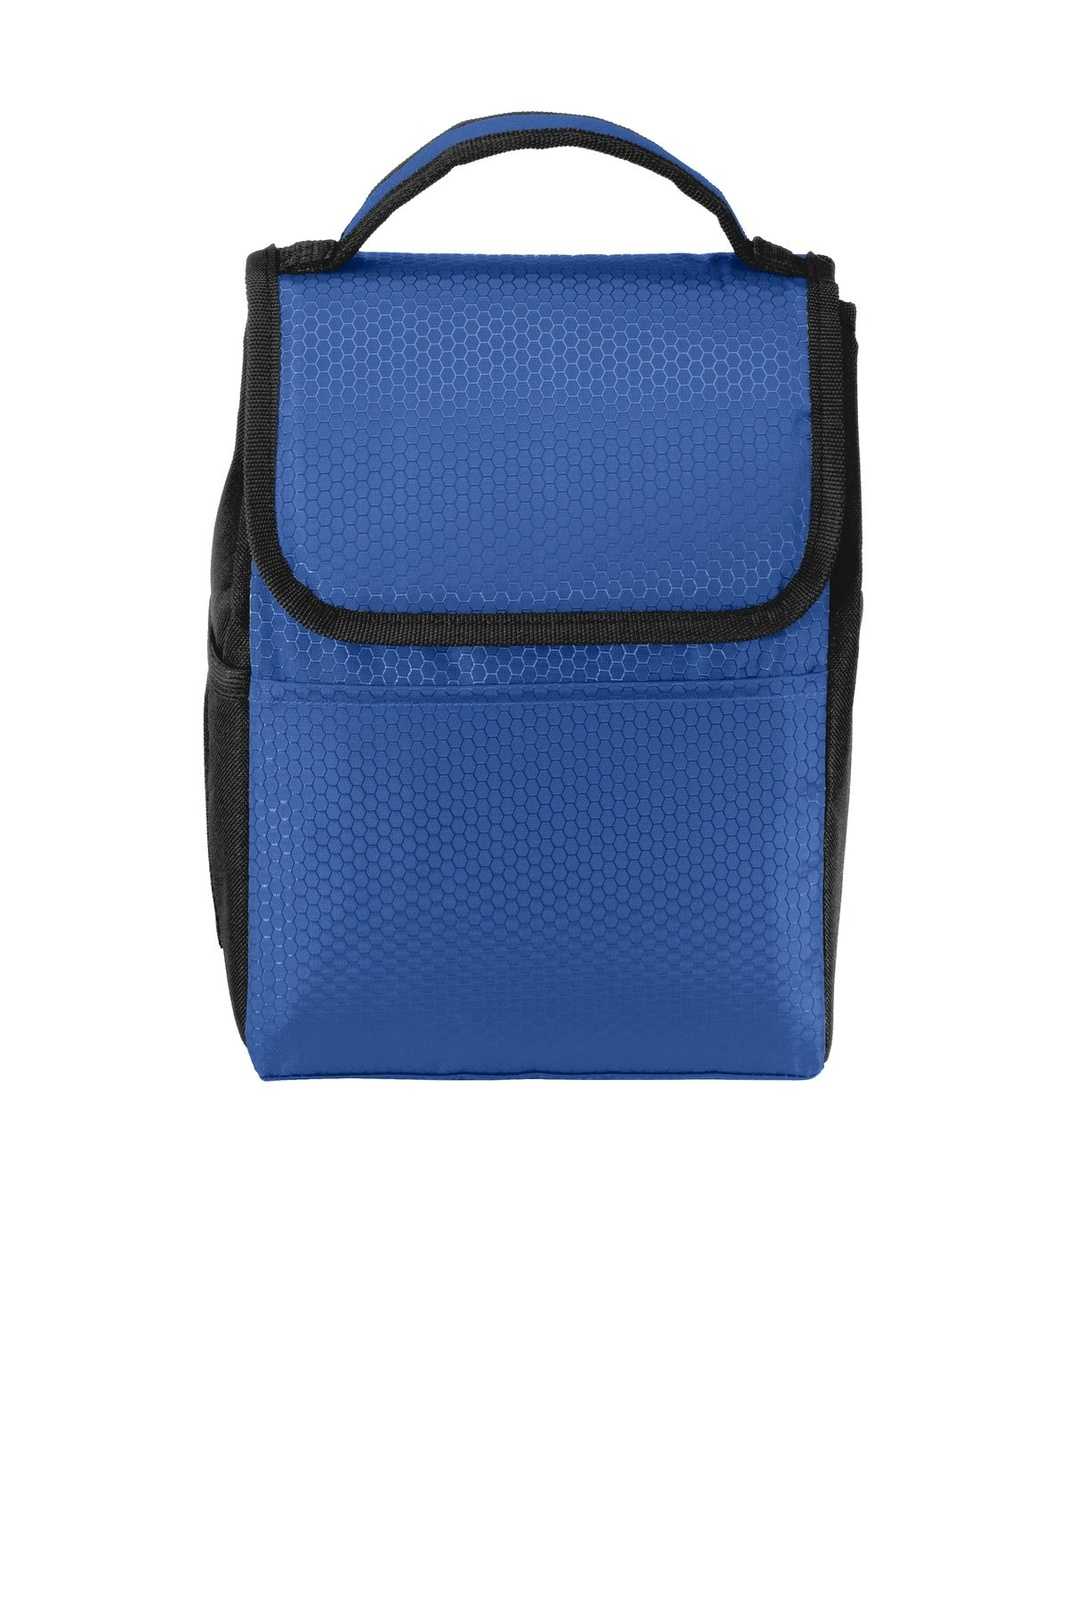 Port Authority BG500 Lunch Bag Cooler - Twilight Blue Black - HIT a Double - 1